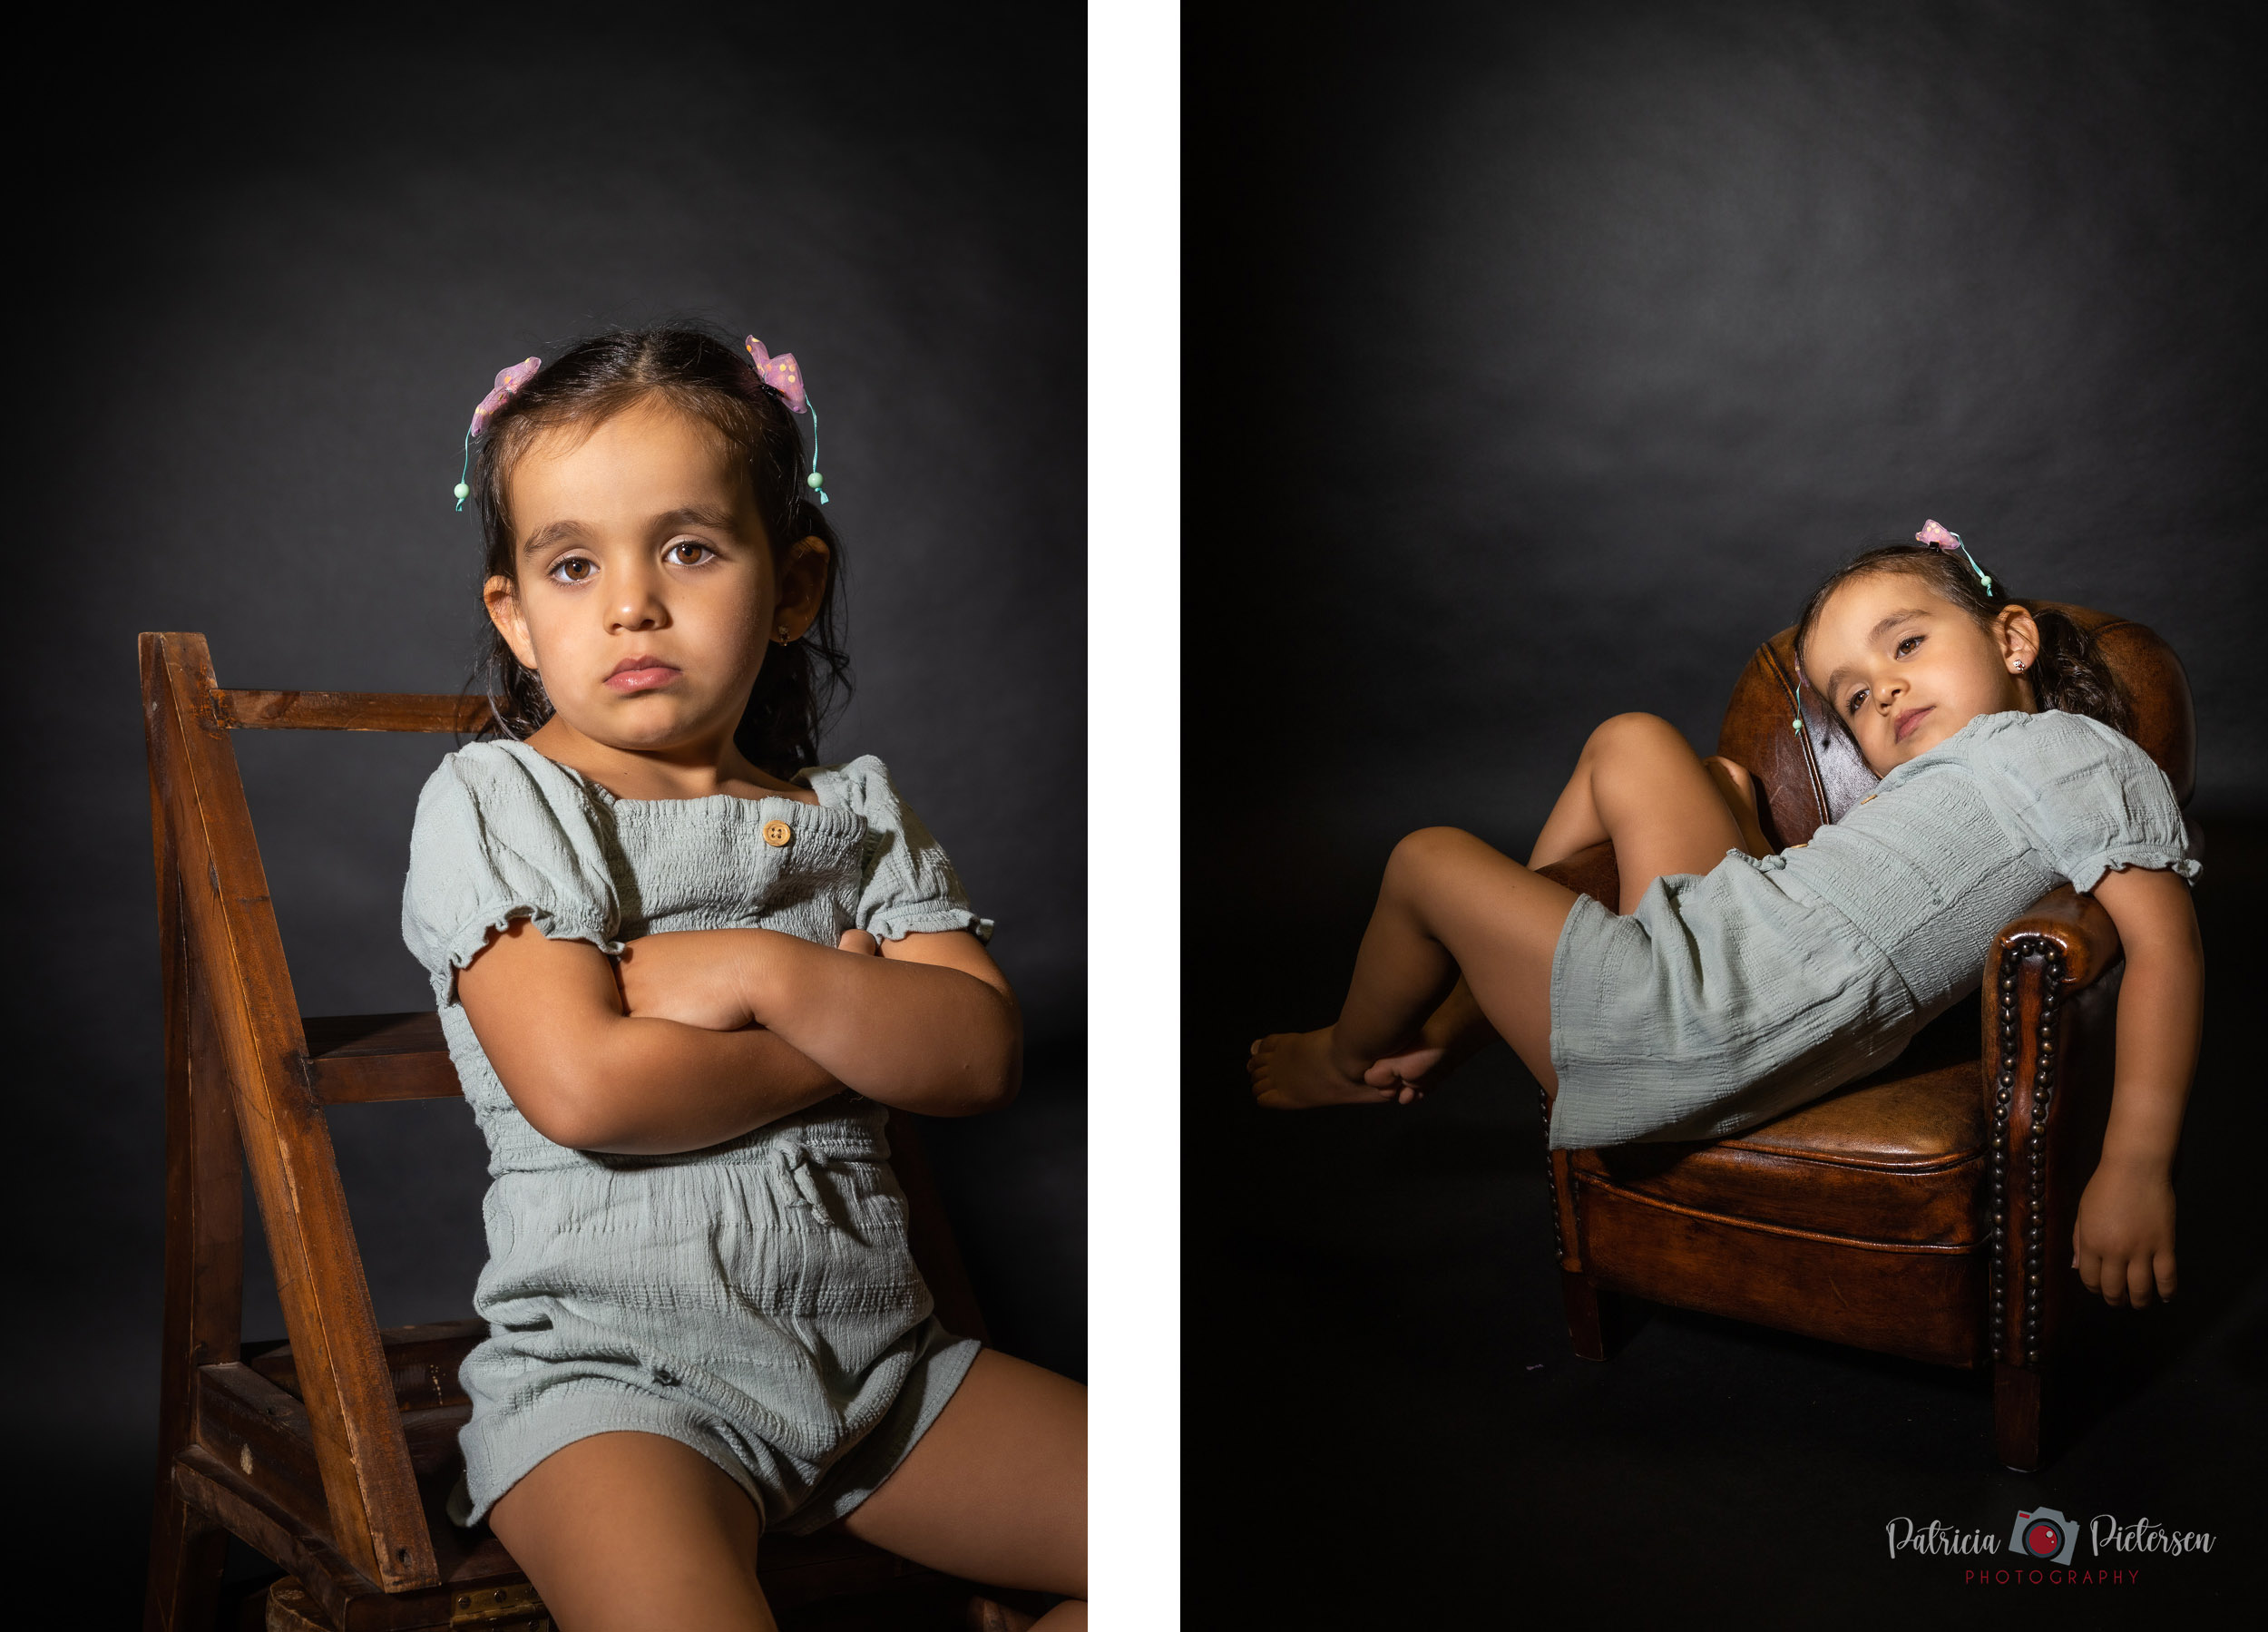 Sara Kinderfotografie Portret Studioreportage Fotograaf Lelystad Patricia Pietersen Photography 4